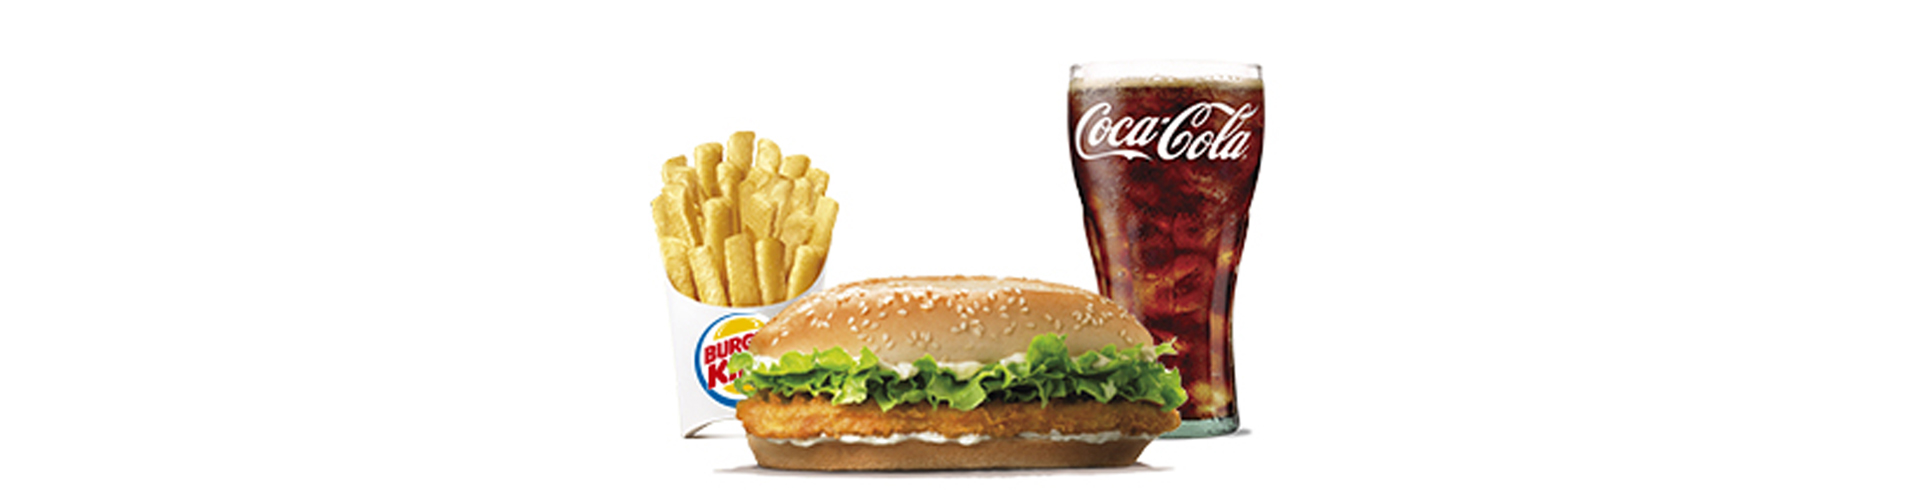 menu-long-chicken-burgerking-40001720-cocacola-light-aros